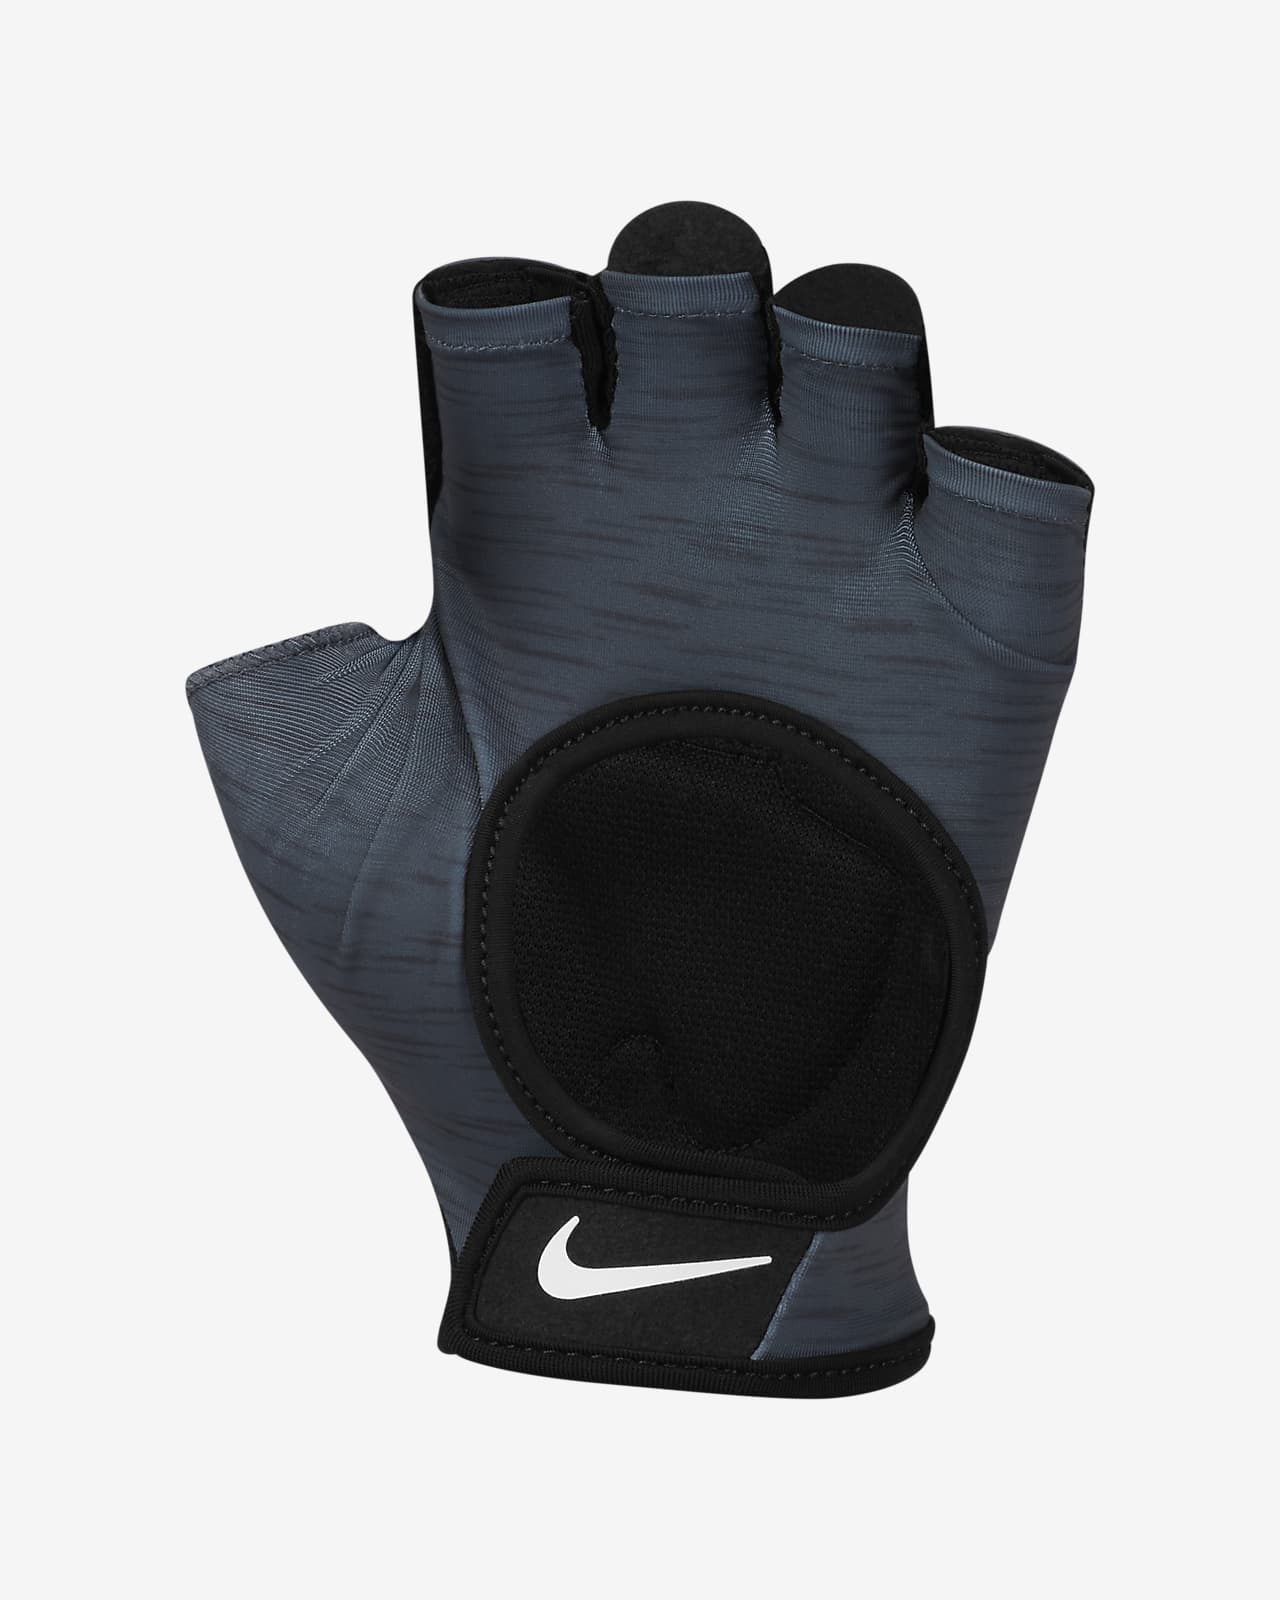 nike ultimate fitness gloves